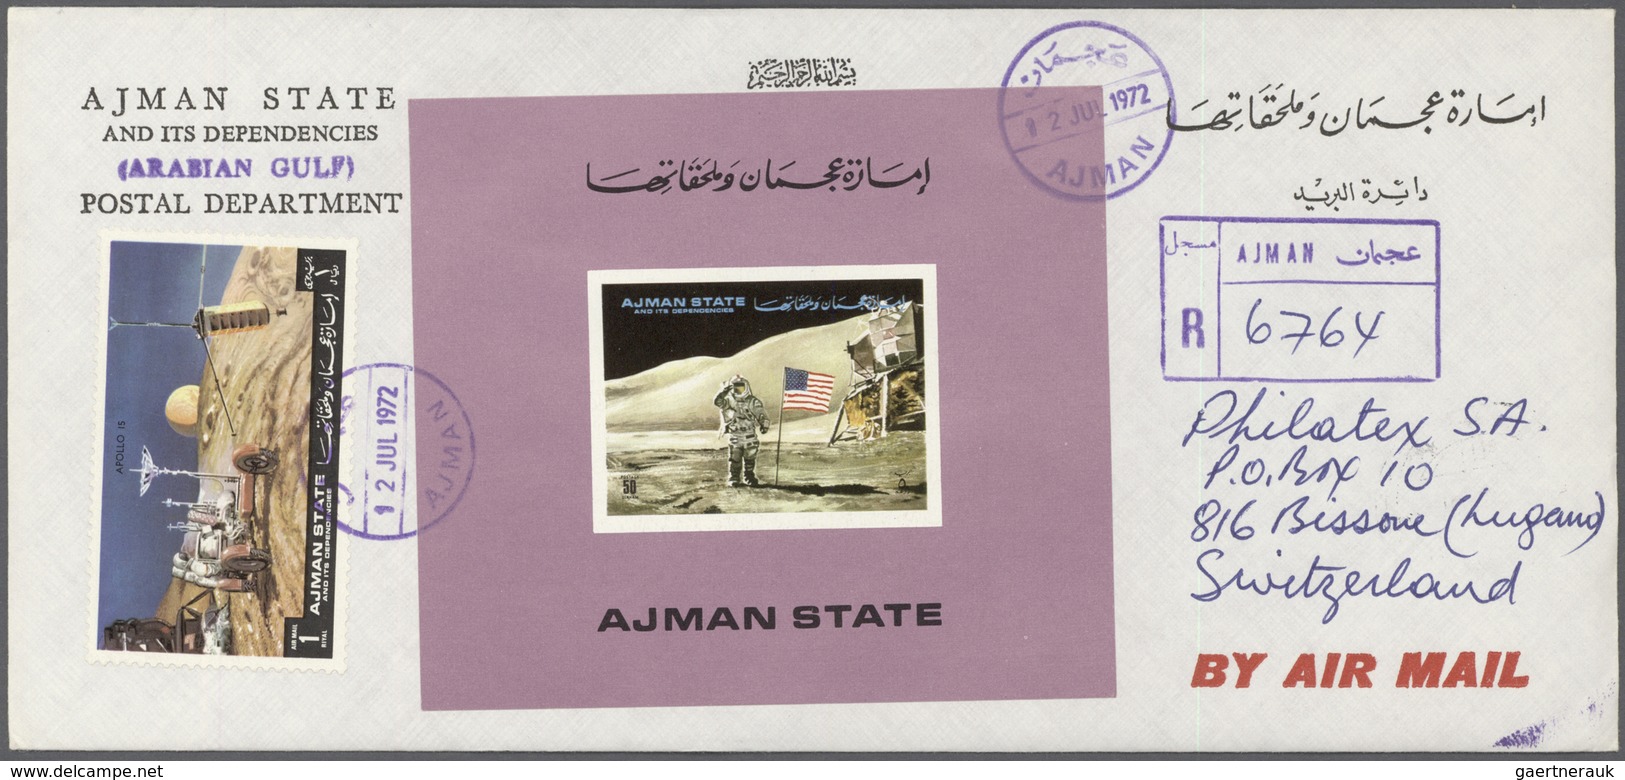 08033 Adschman / Ajman: 1972, Apollo 15 (Exploring the moon), complete set of six de luxe sheets with purp